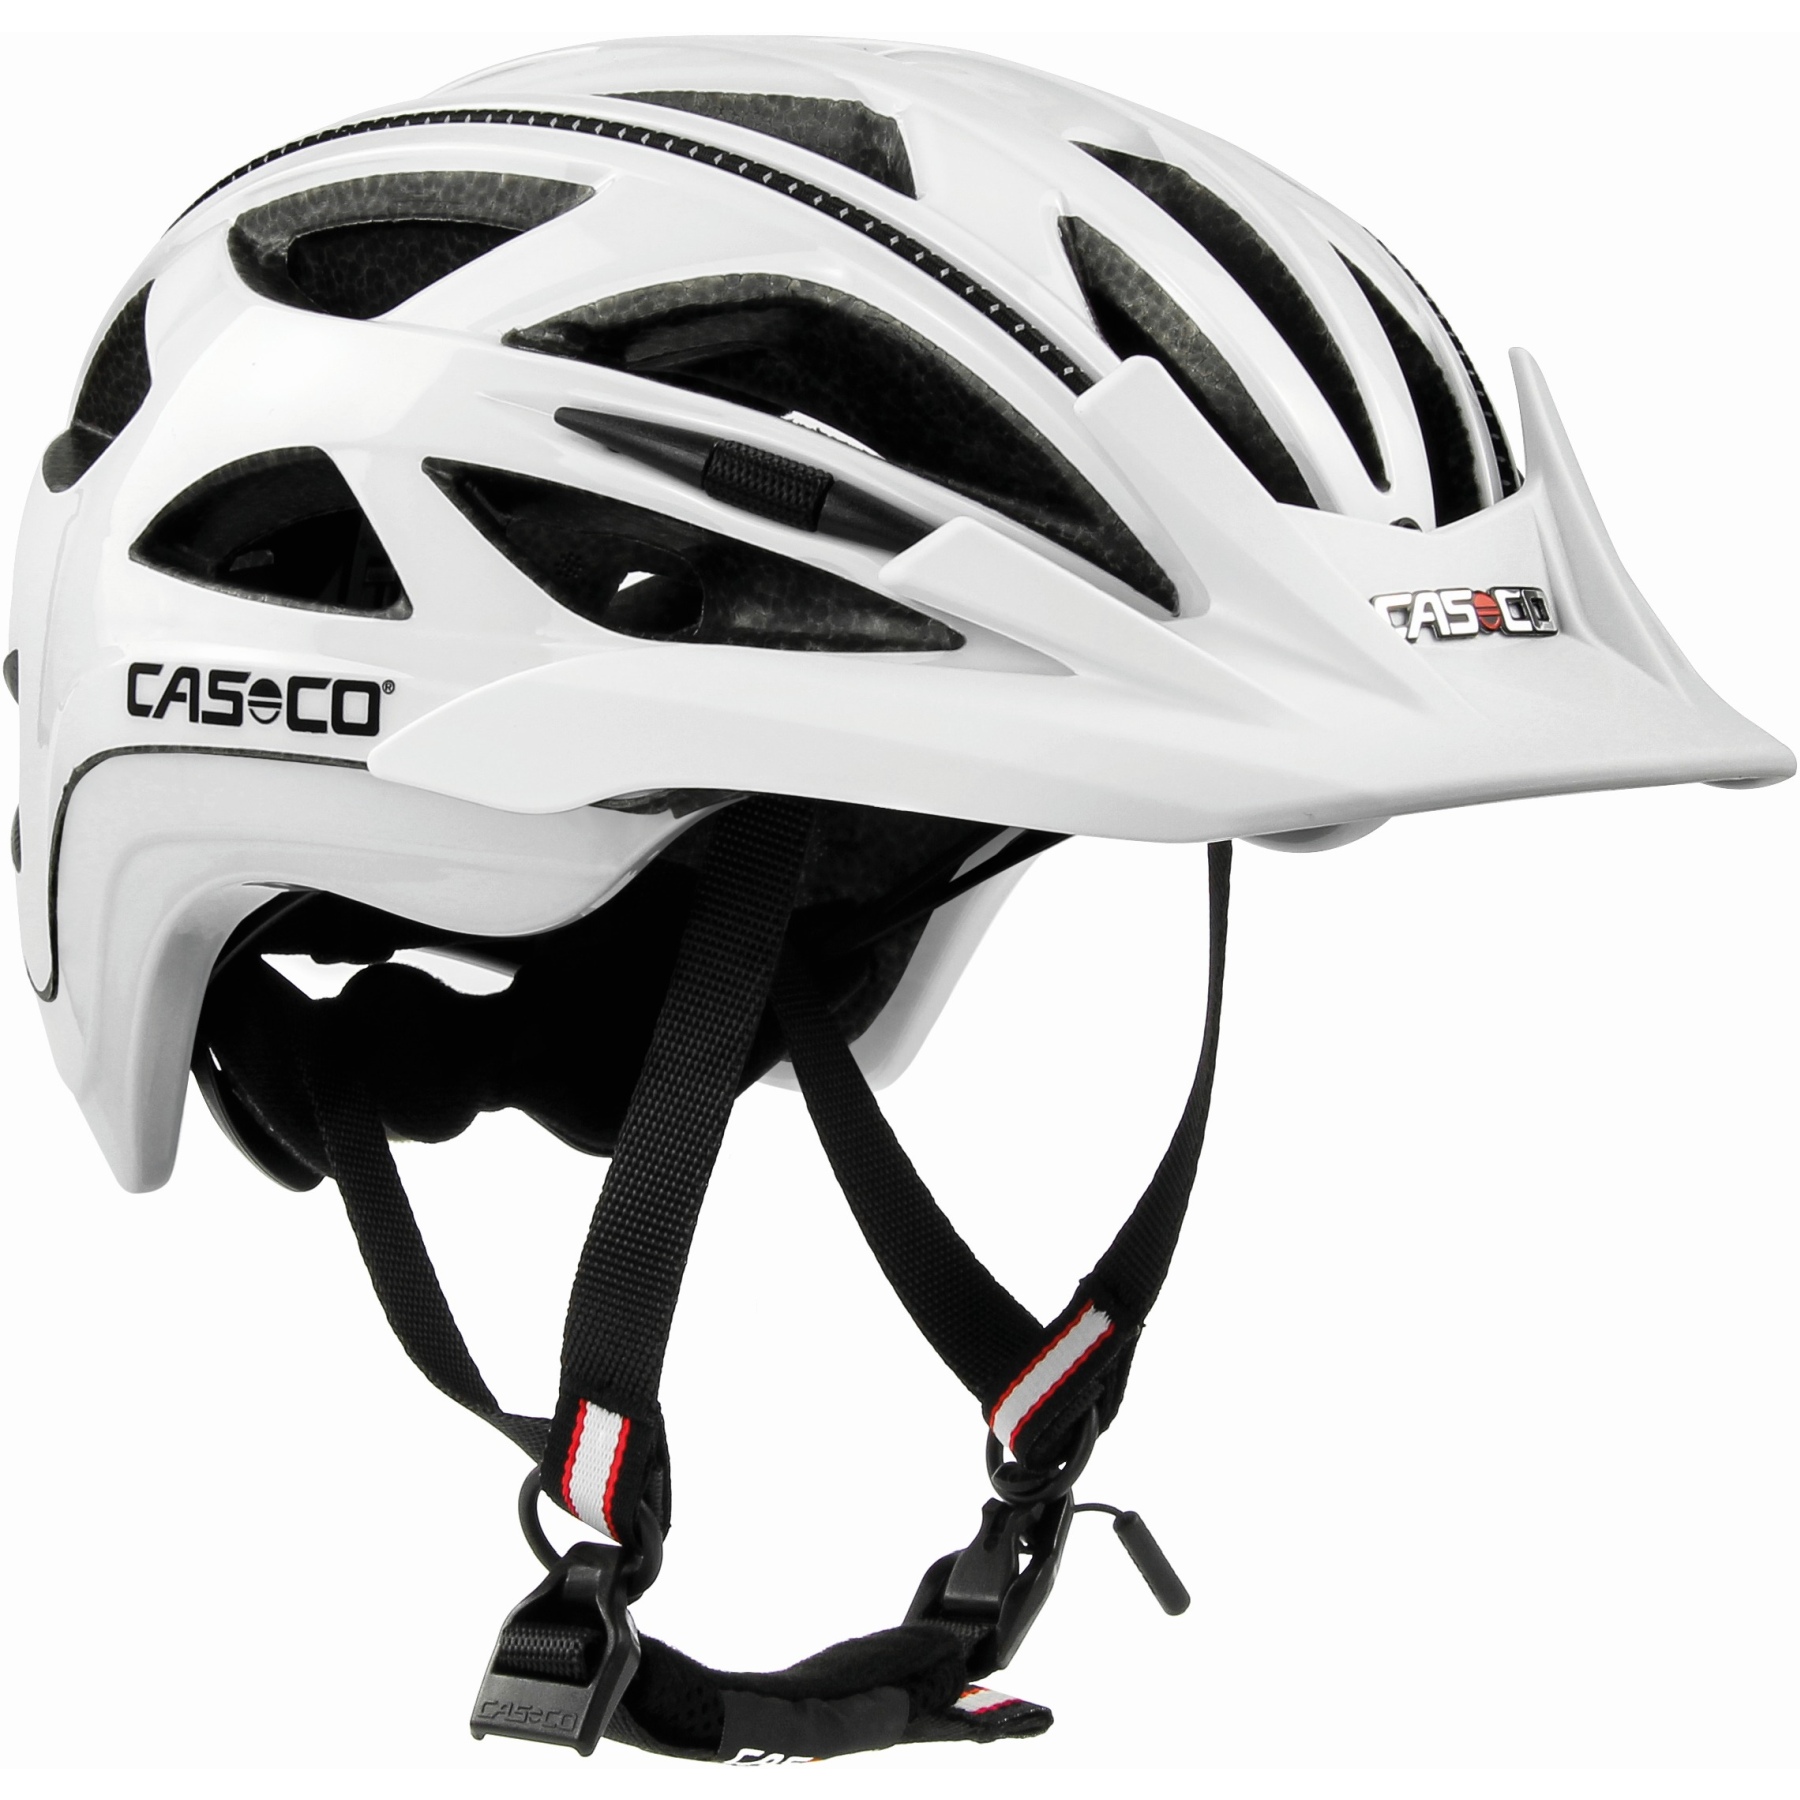 Productfoto van Casco Activ 2 Helm - white shiny